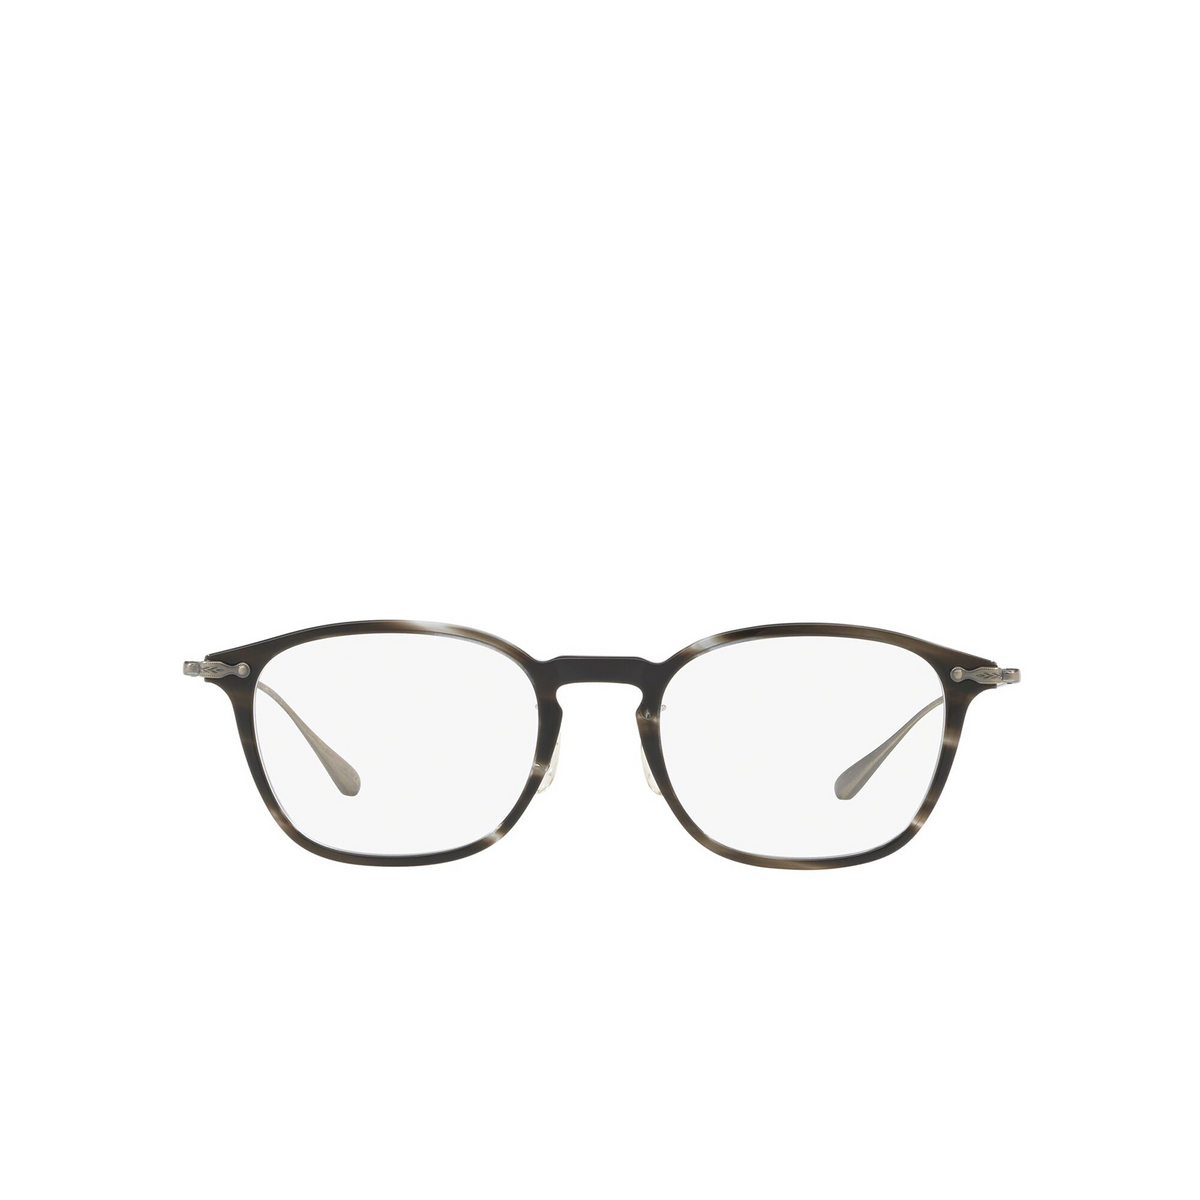 Oliver Peoples WINNET Eyeglasses 1443 Ebony Wood - front view